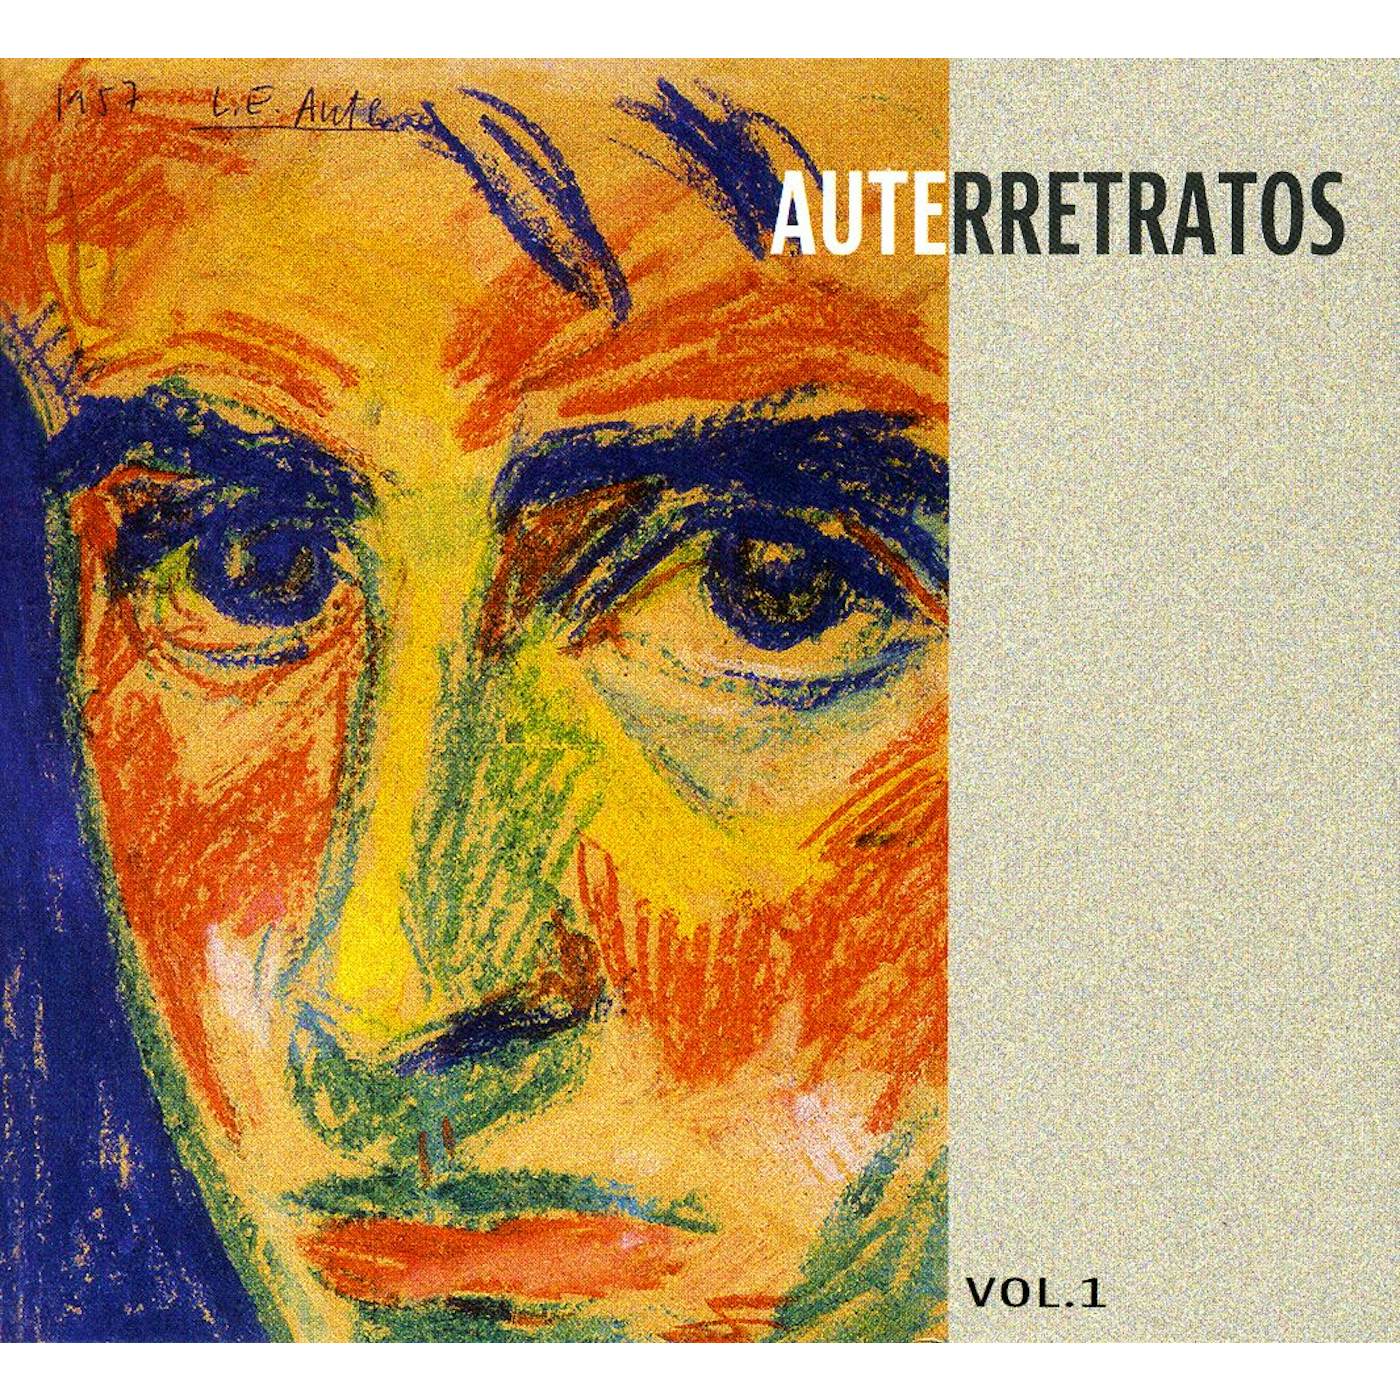 Luis Eduardo Aute AUTORRETRATOS CD